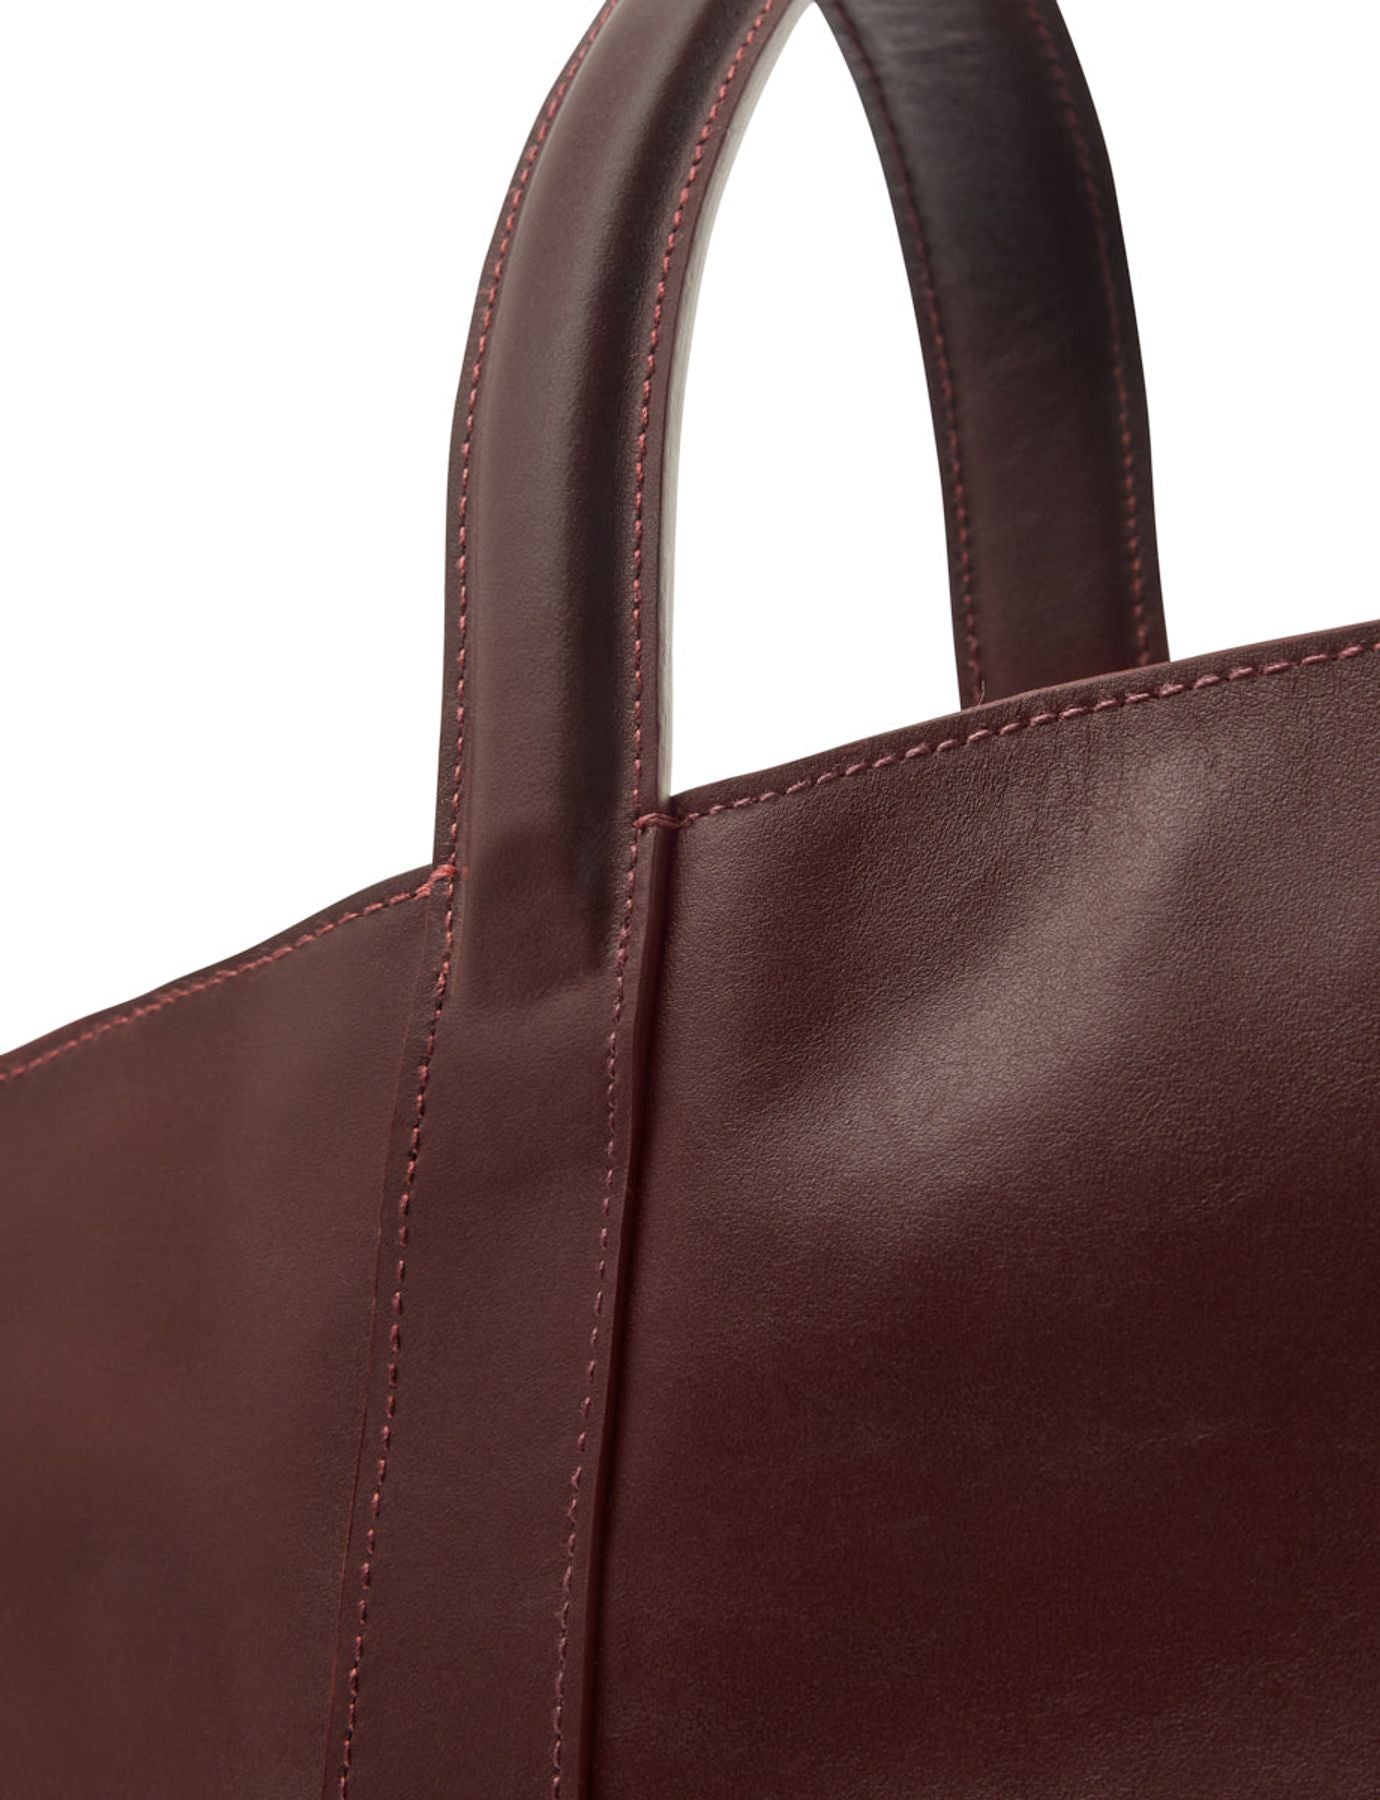 bag-cabas-leather-leonore-small-format-bordeaux